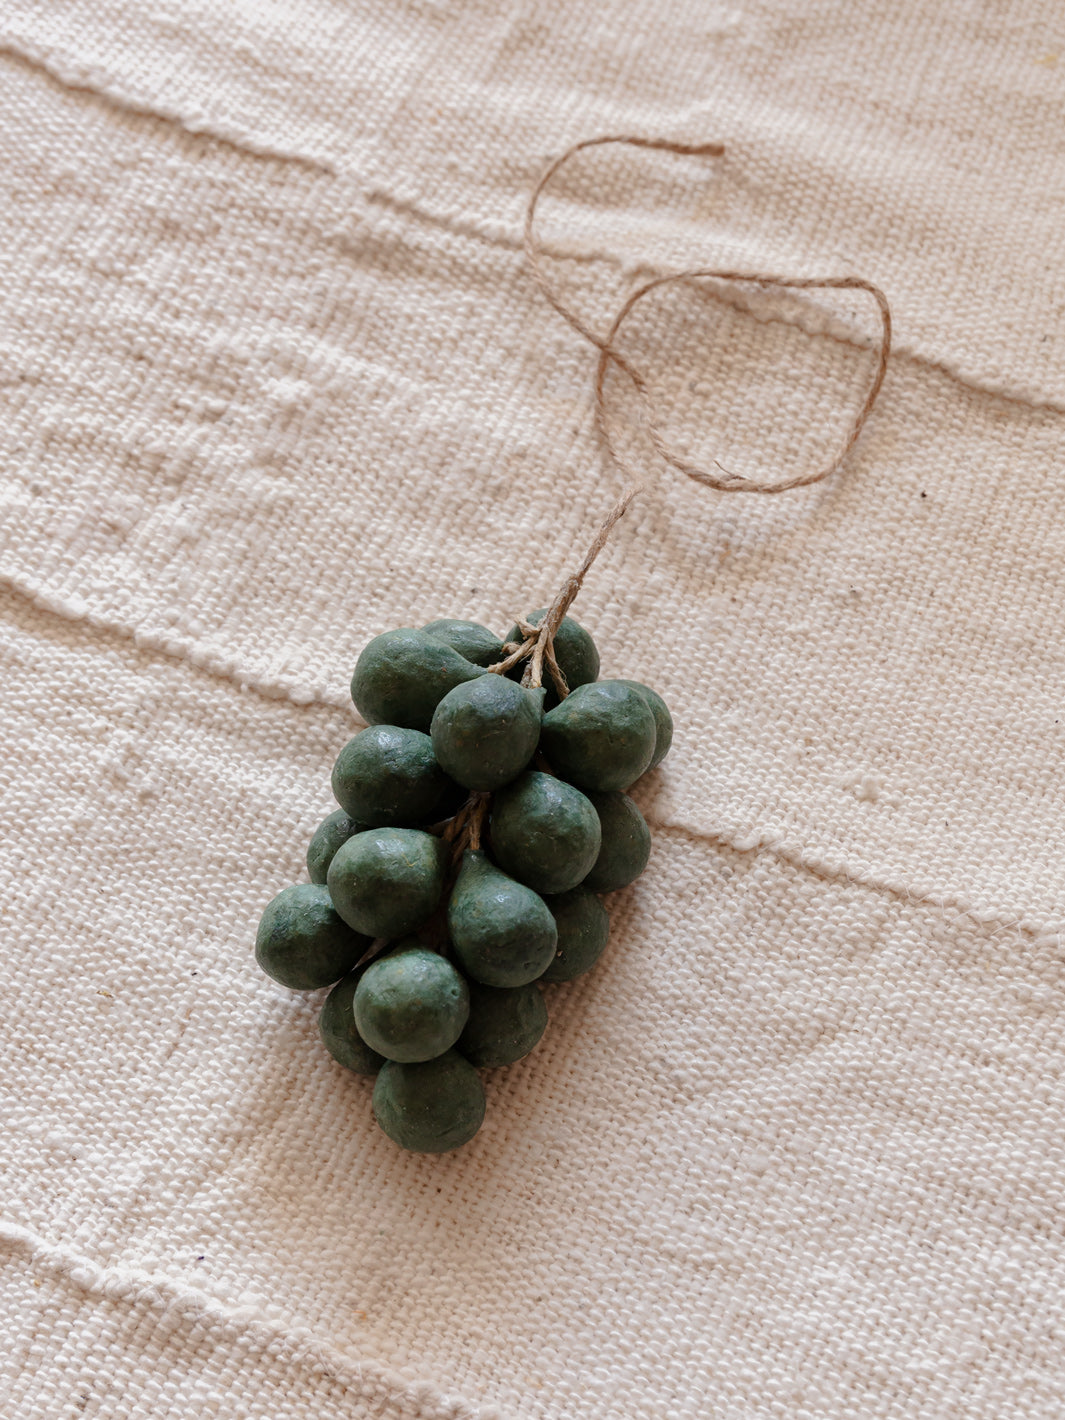 Savon Petits Grappes from Raisins Verts